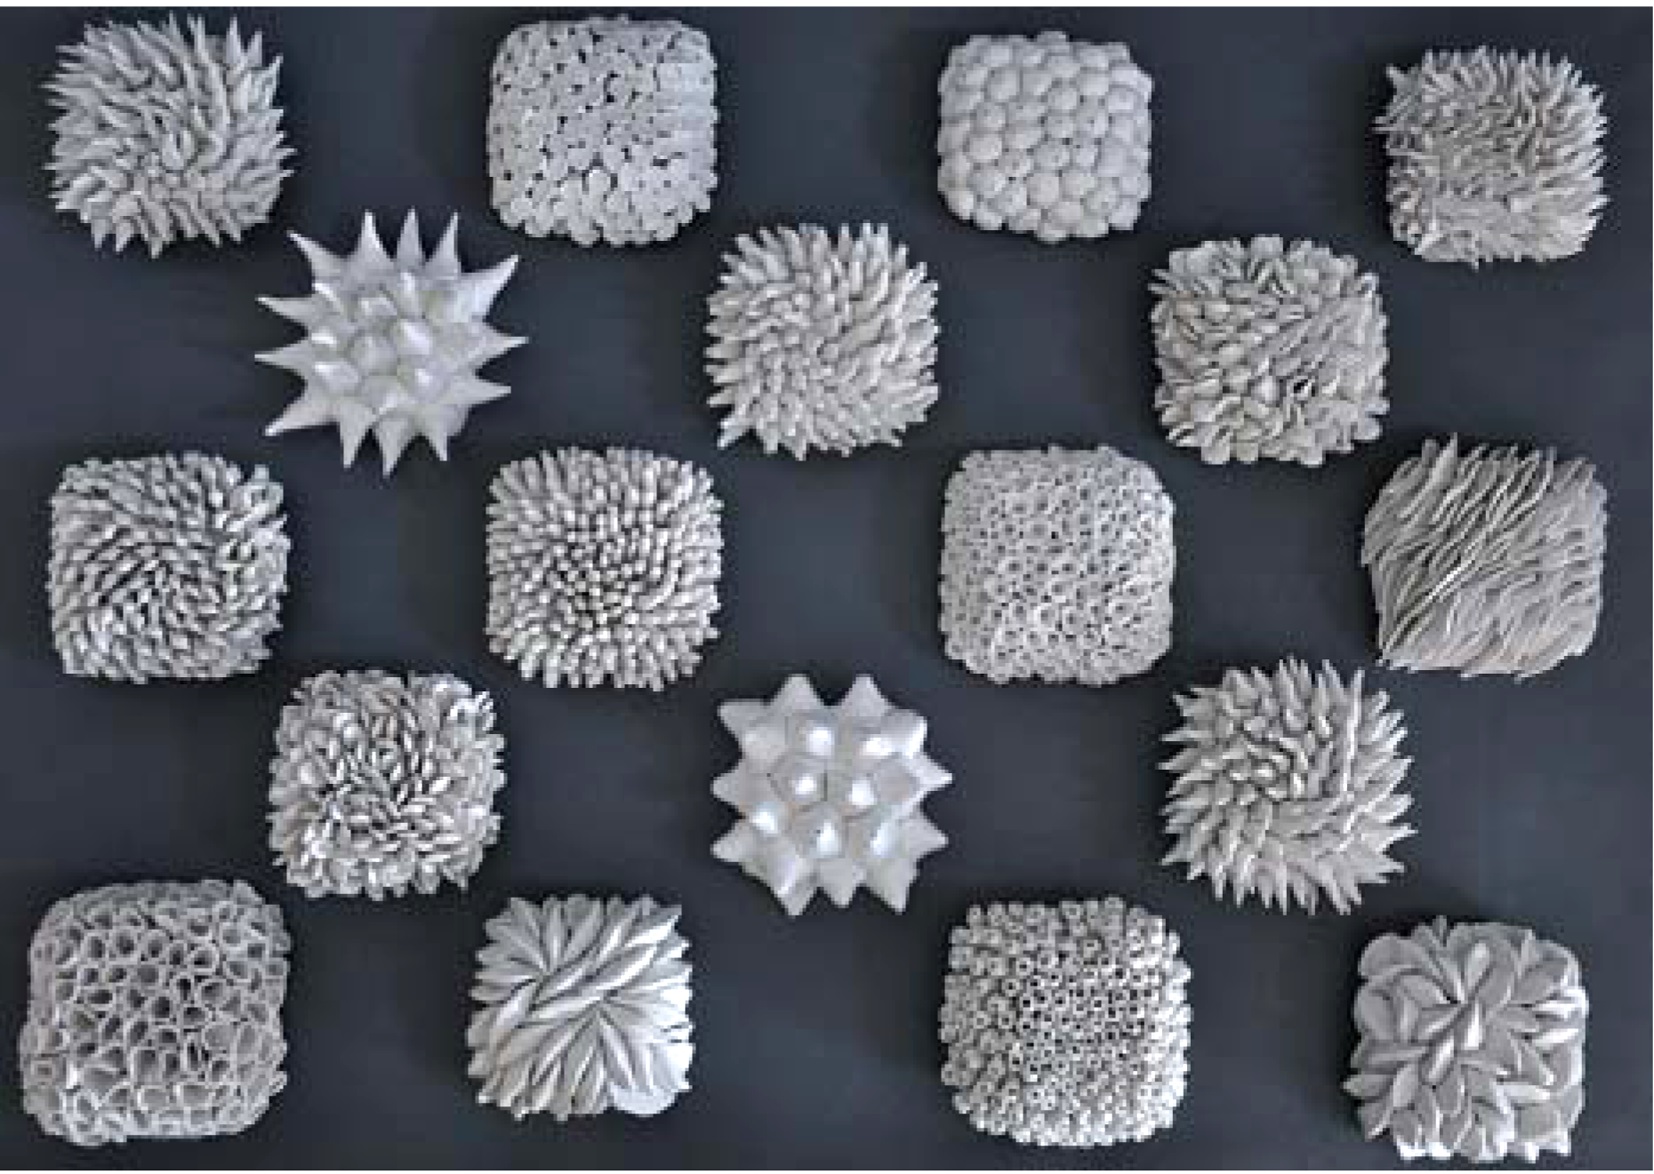 Texture creation in ceramics by Heather Knight. www.heatherknight ceramics.com.